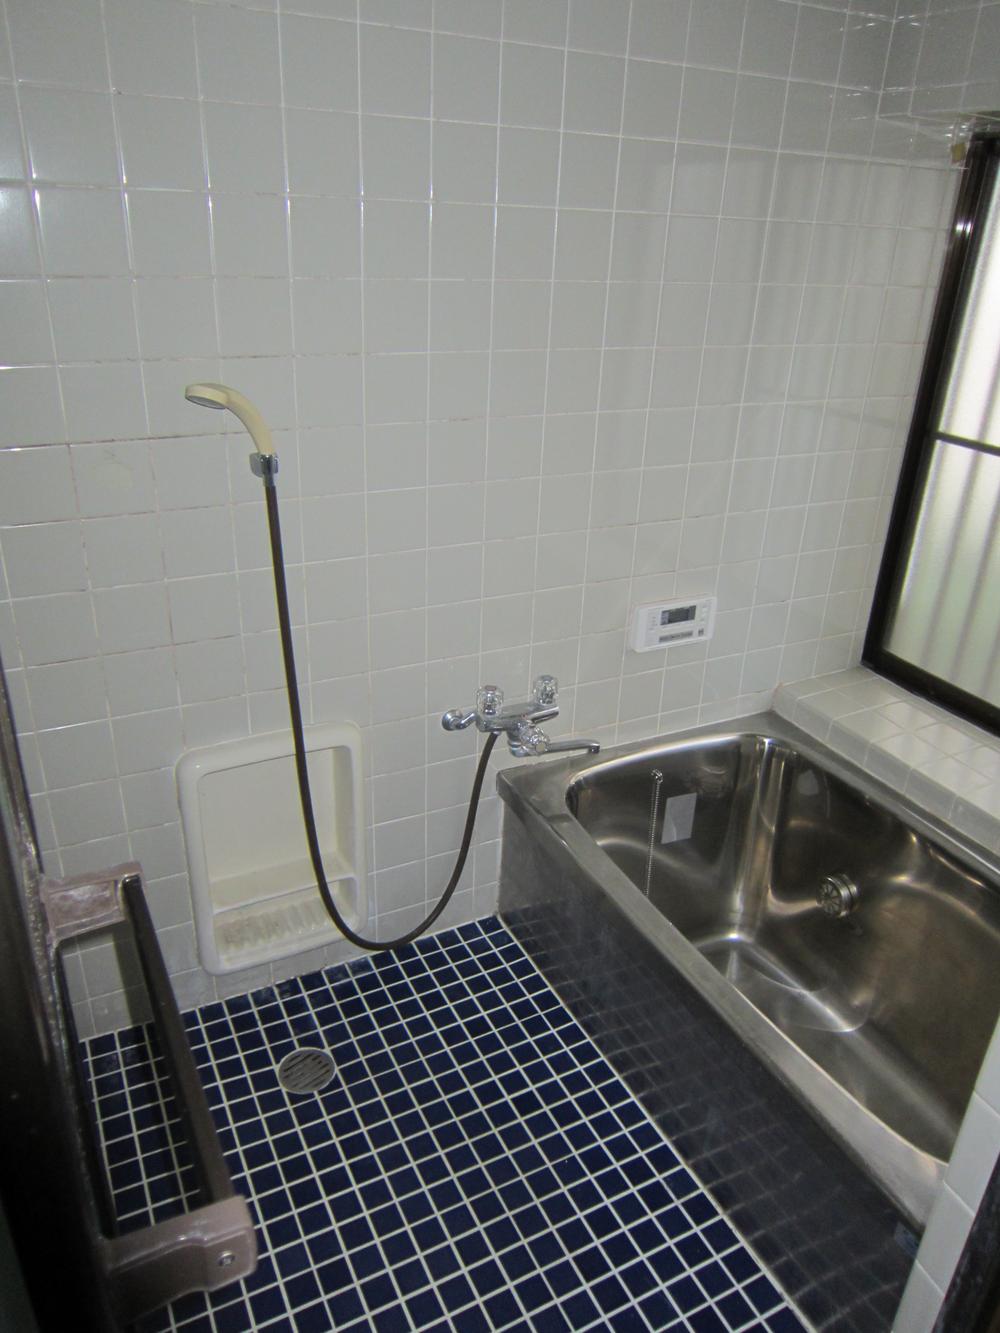 Bathroom. Add-fired function with bathroom. Ventilation efficiency good big Madoyu. Indoor (September 2013) Shooting